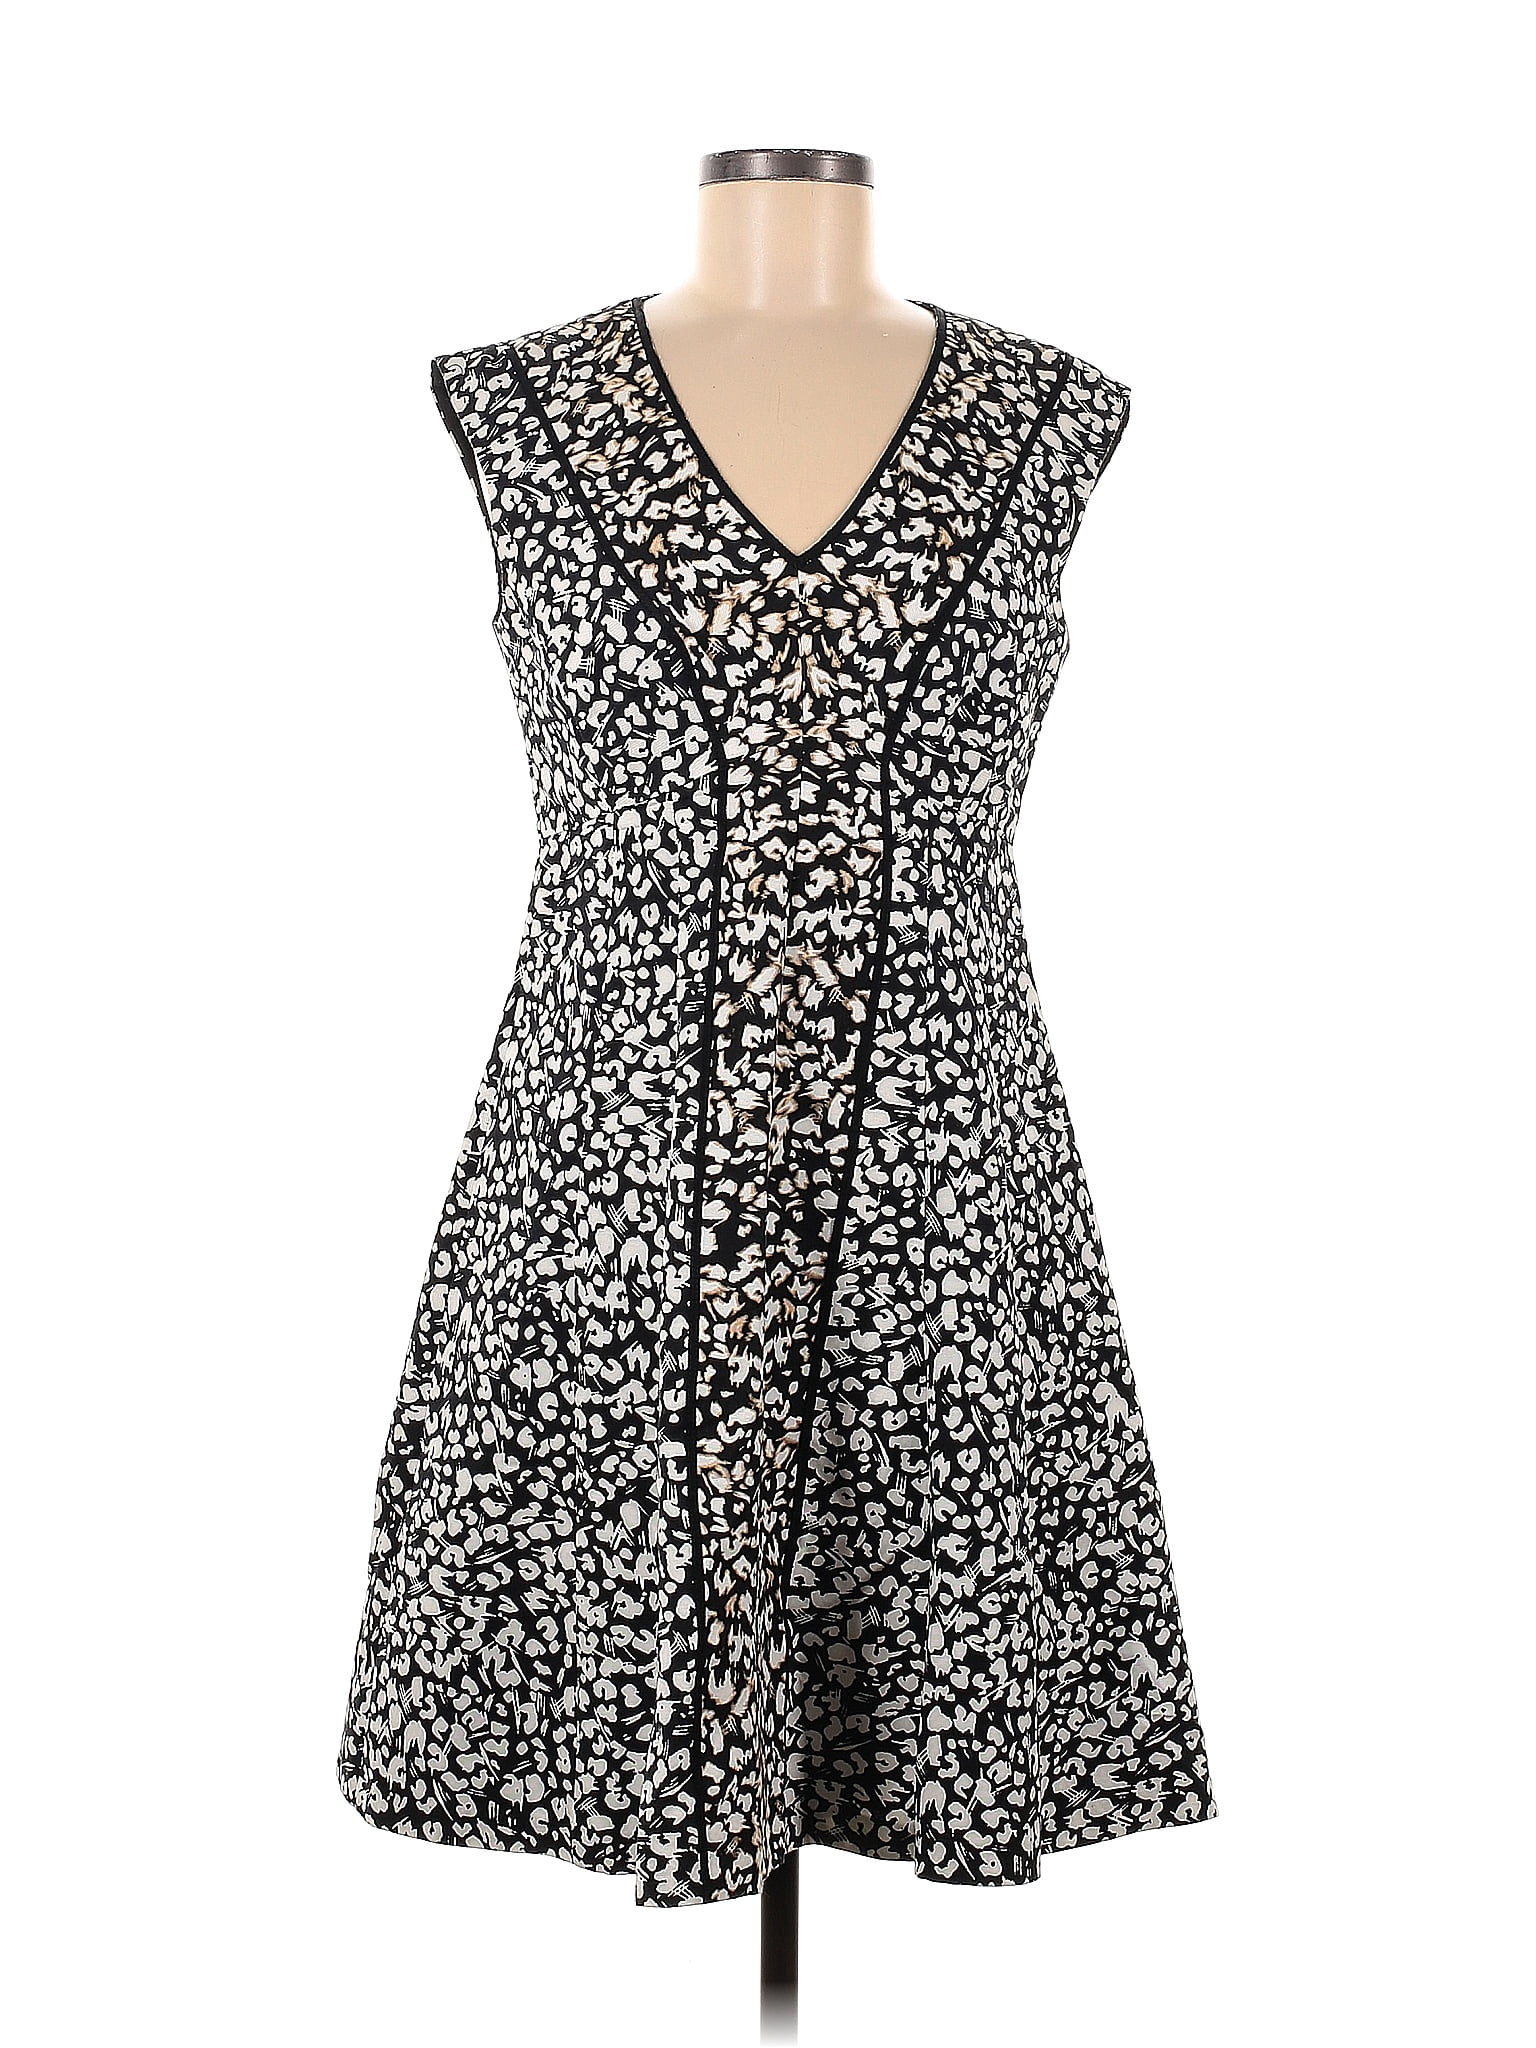 Nanette Lepore Multi Color Black Casual Dress Size 8 - 85% off | thredUP